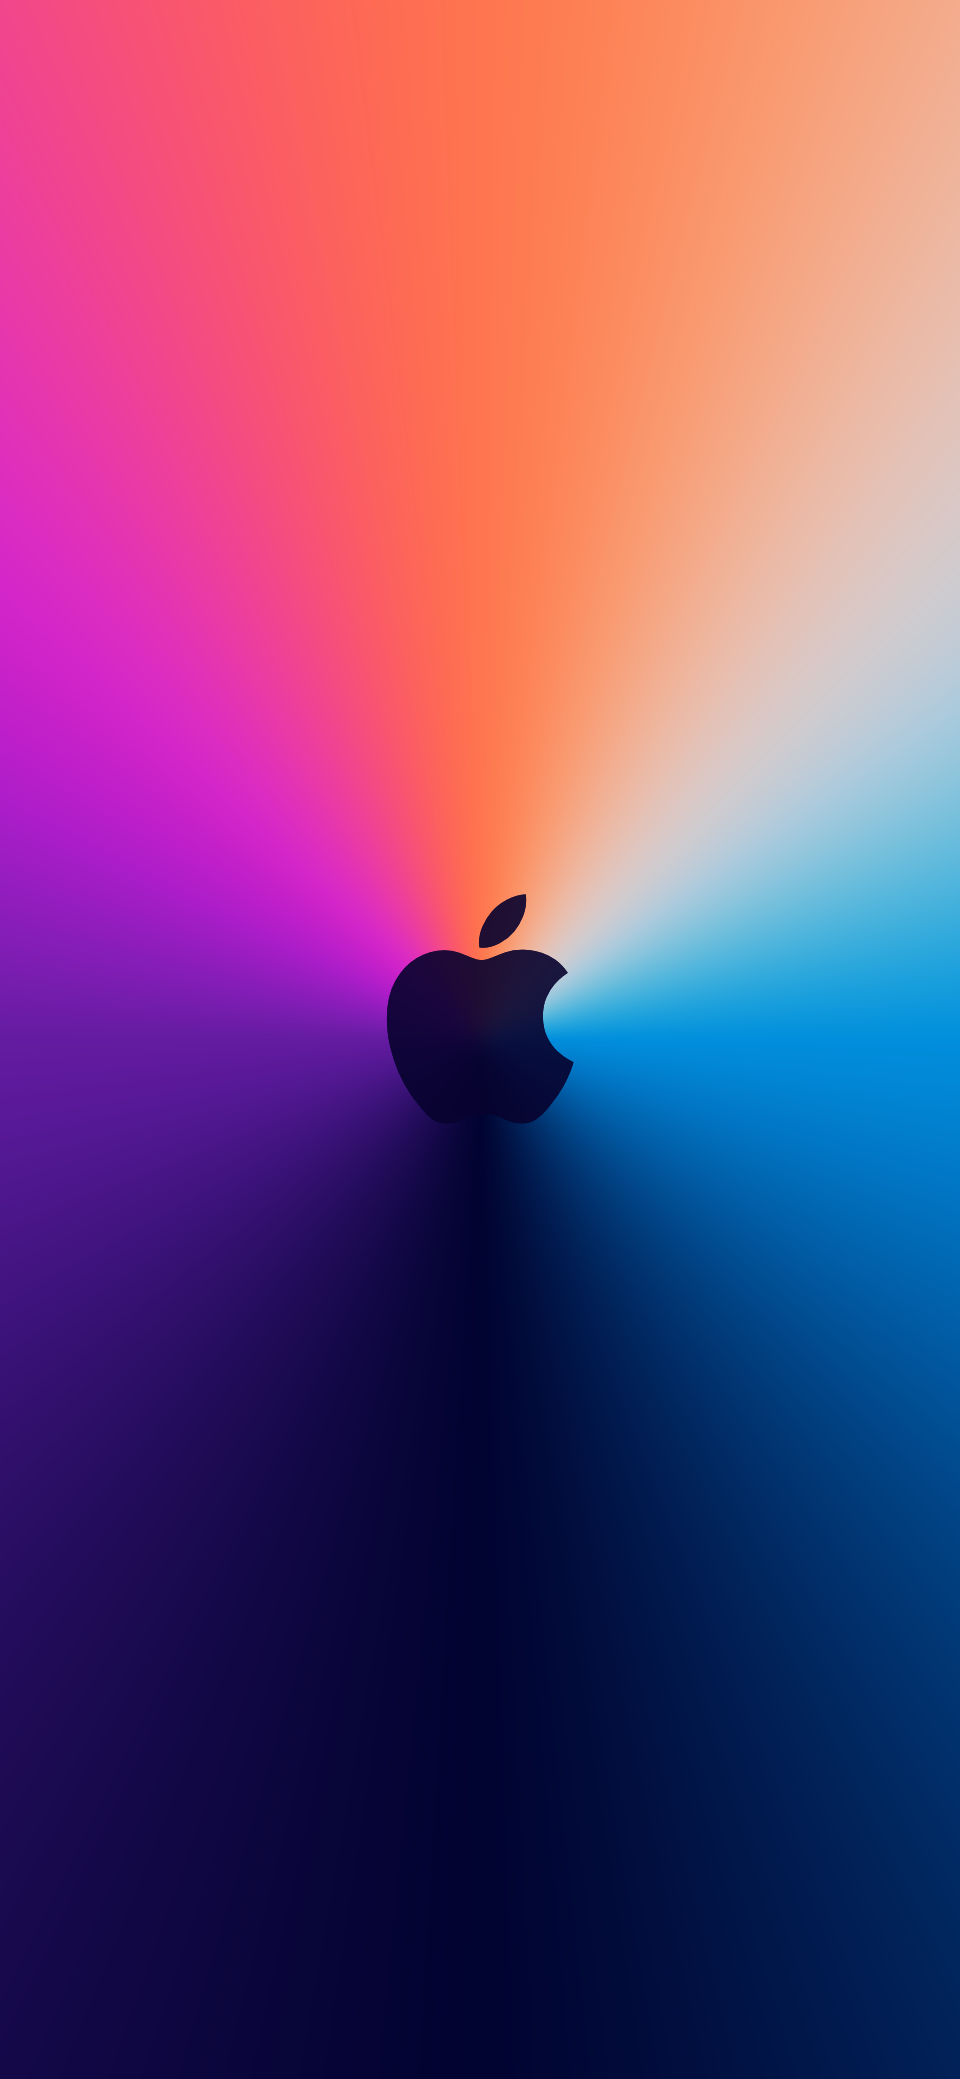 iPhone 12 Pro Max Wallpaper. Apple iphone wallpaper hd, Apple wallpaper iphone, Apple logo wallpaper iphone